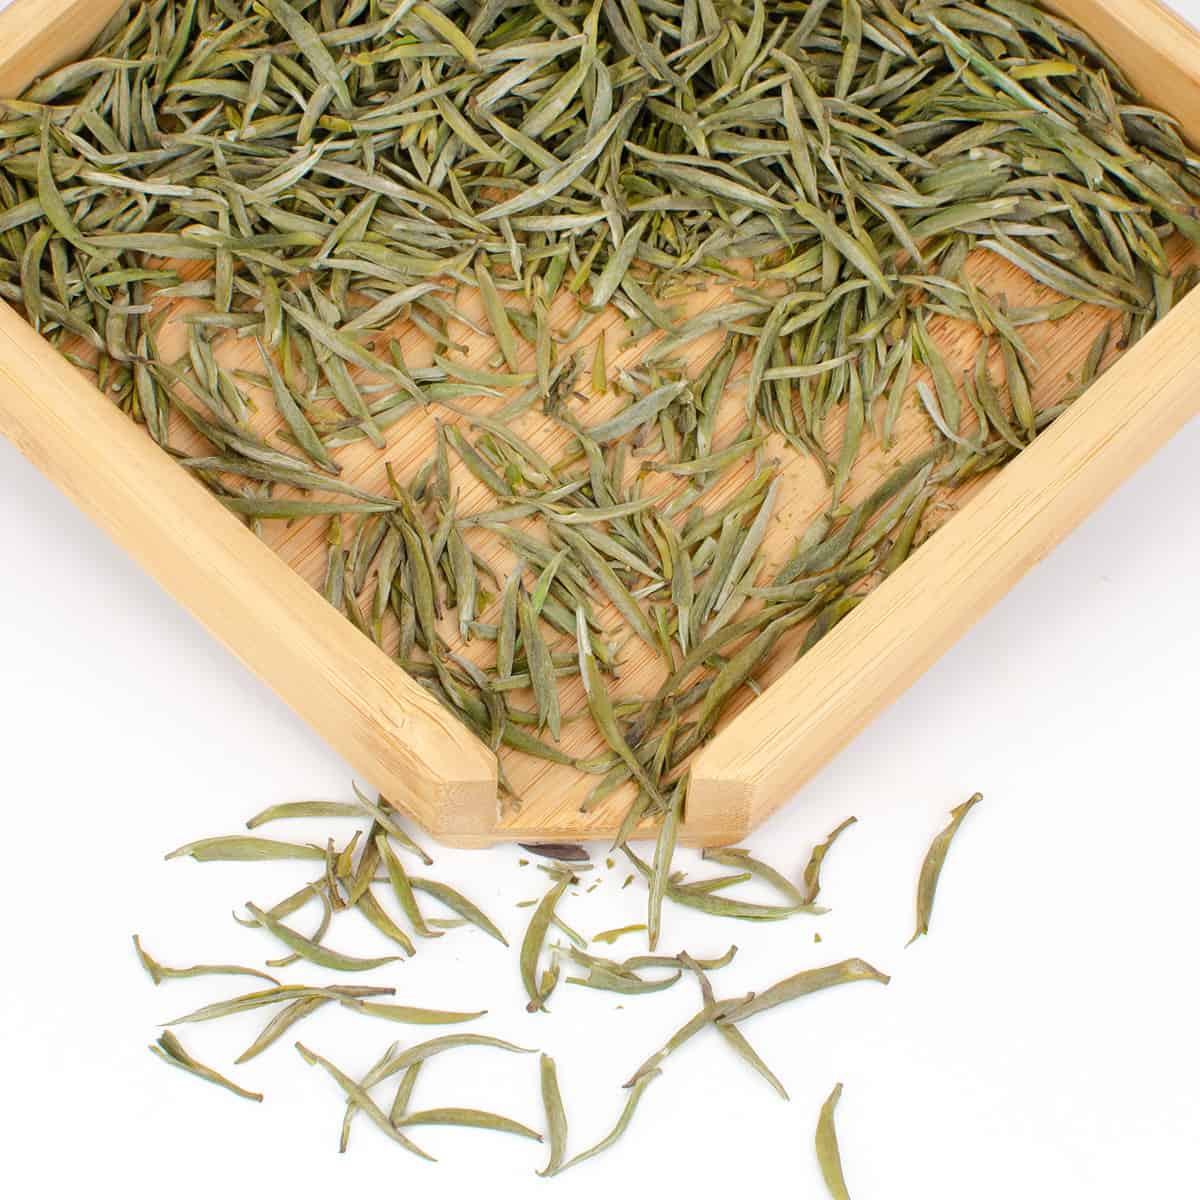 Junshan Yinzhen tea